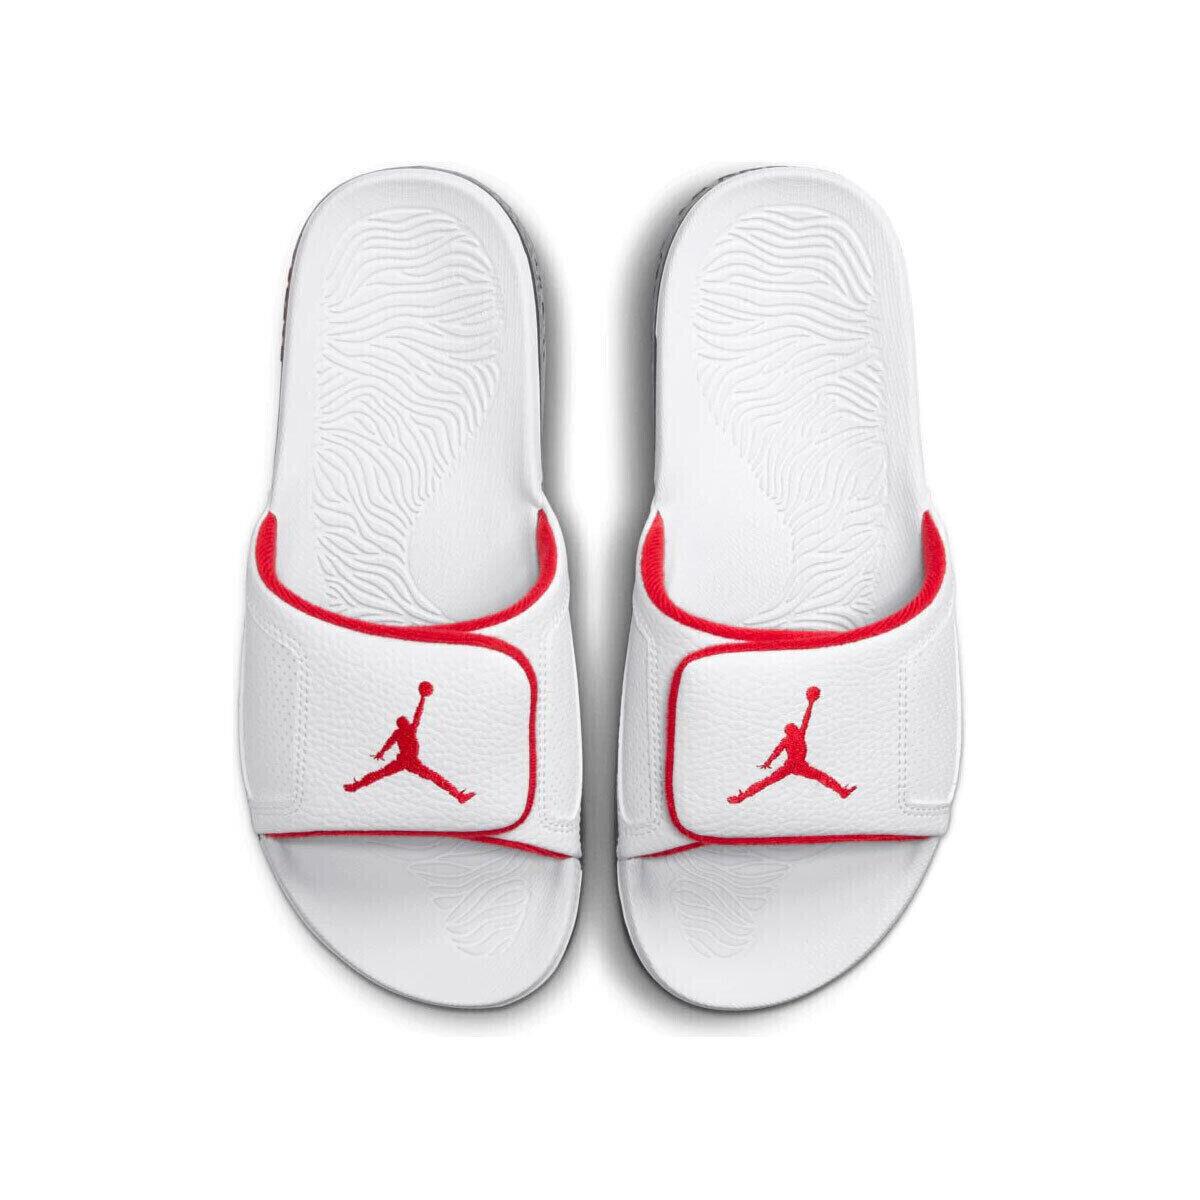 Nike Air Jordan Hydro Iii 3 Retro White Red Slides Size 13 Mens 854556 103